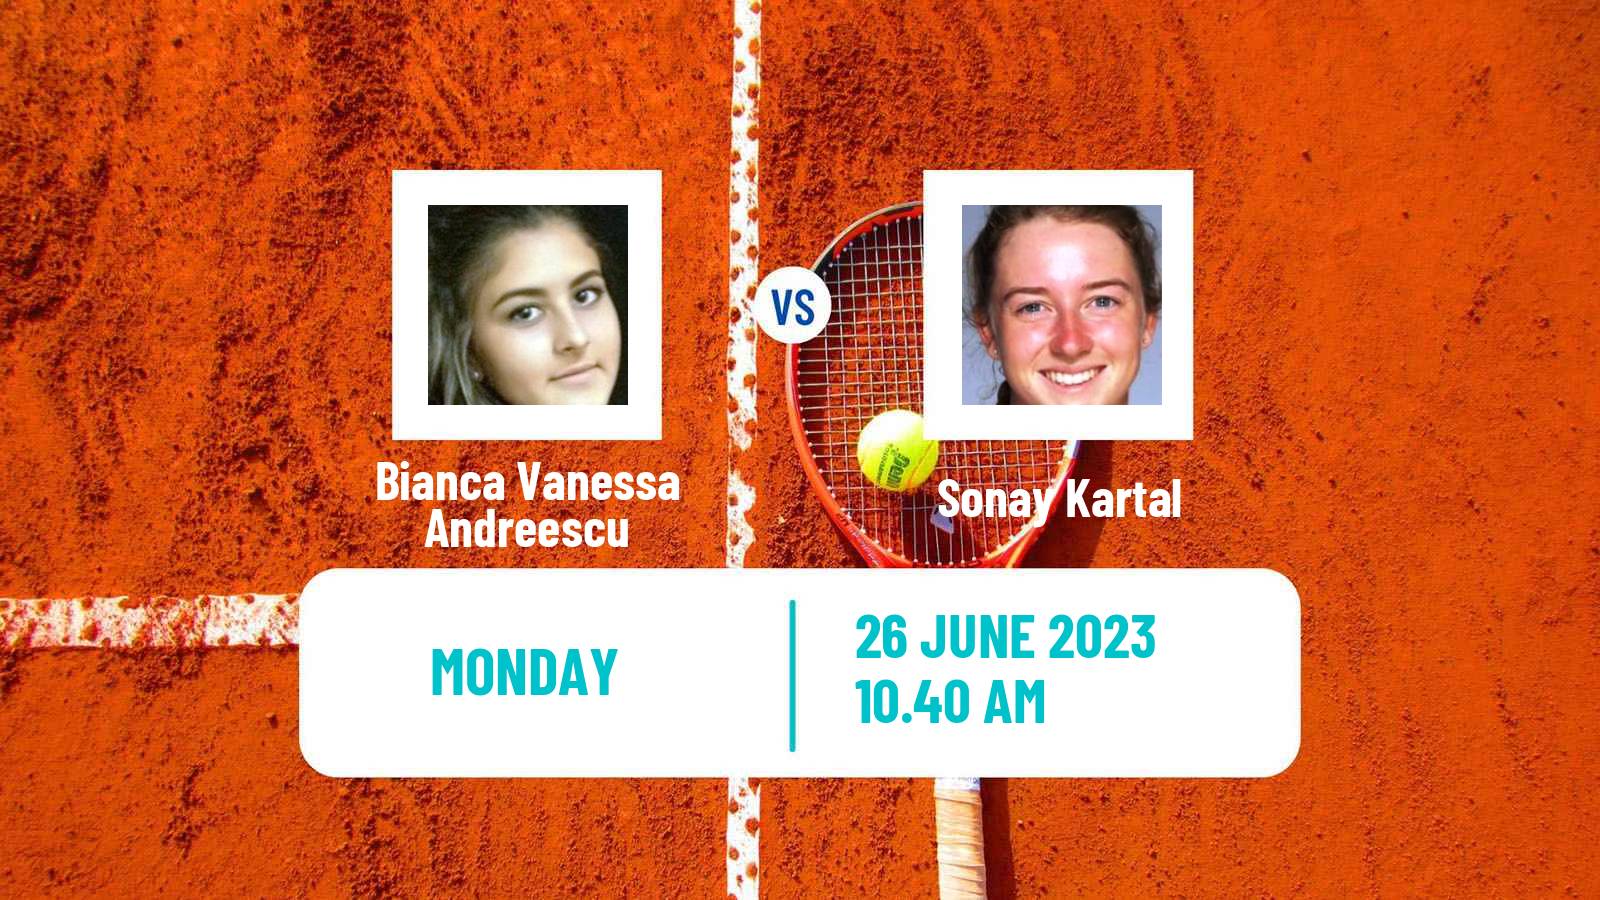 Tennis WTA Bad Homburg Bianca Vanessa Andreescu - Sonay Kartal